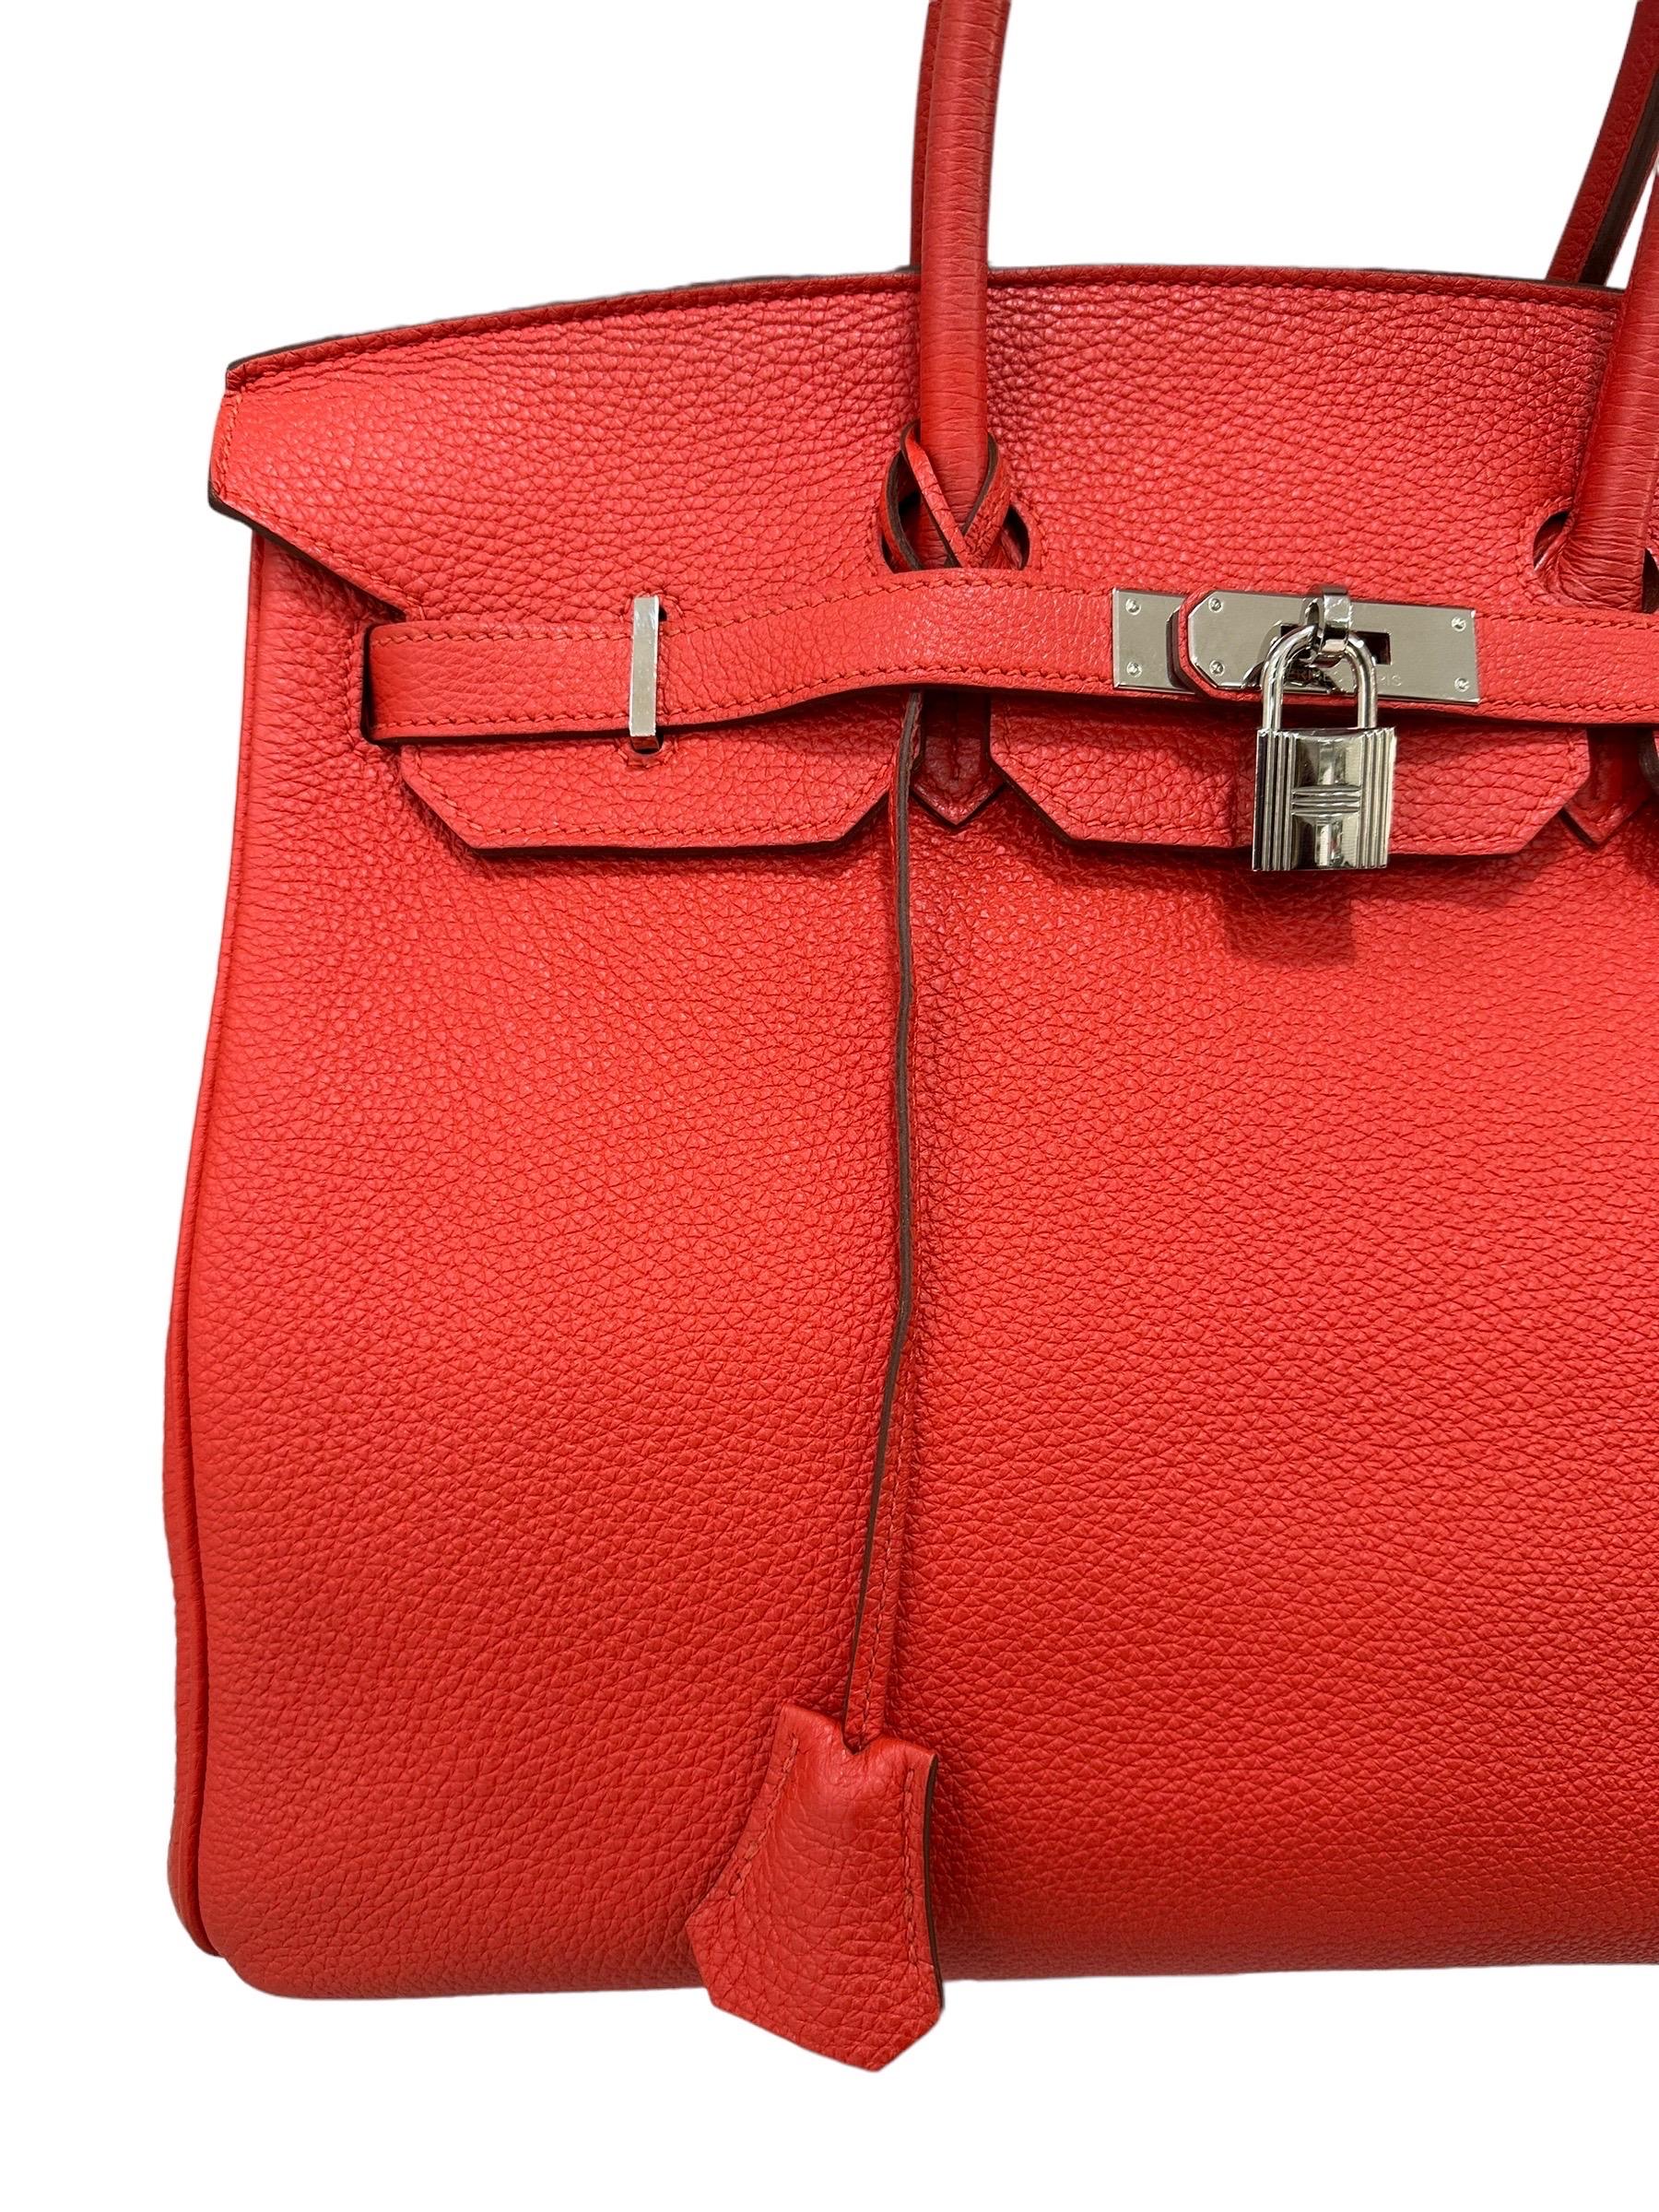 2011 Hermès Birkin 35 Togo Leather Rouge Capucine Top Handle Bag For Sale 9